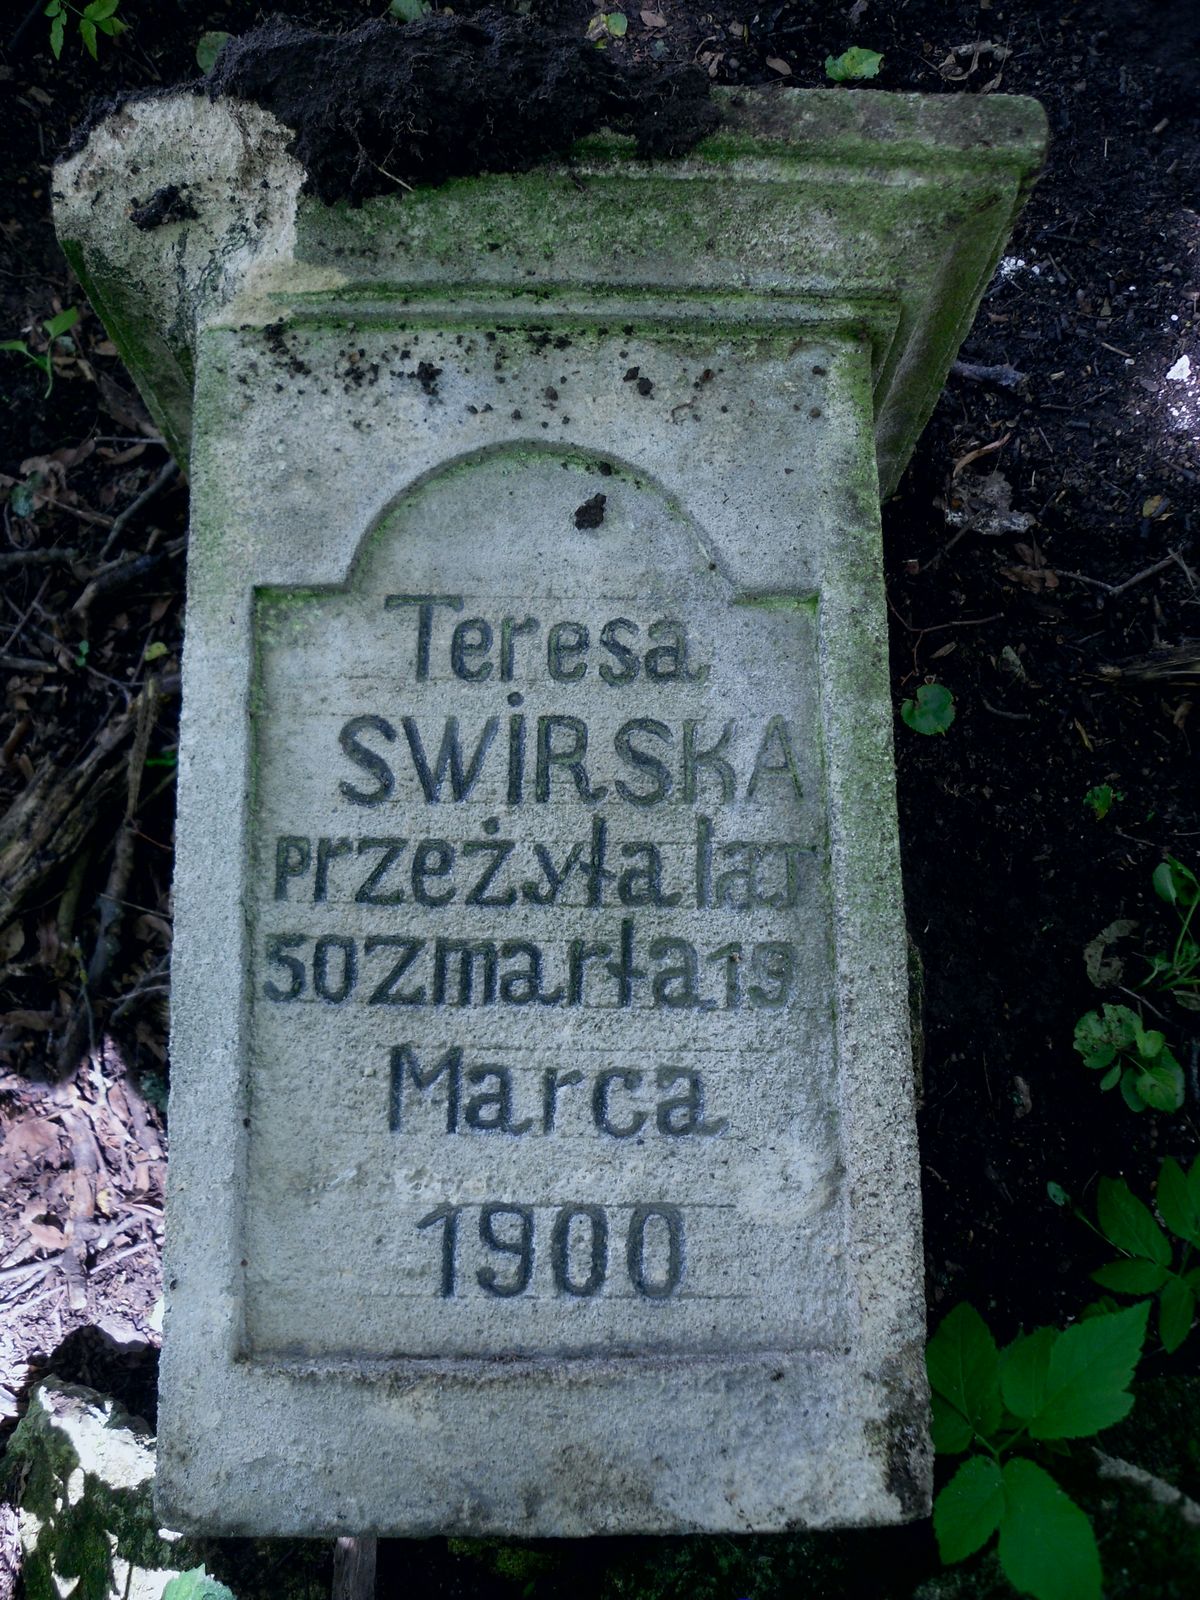 Inscription from the gravestone of Teresa Swirska. Cemetery in Kokutkowce